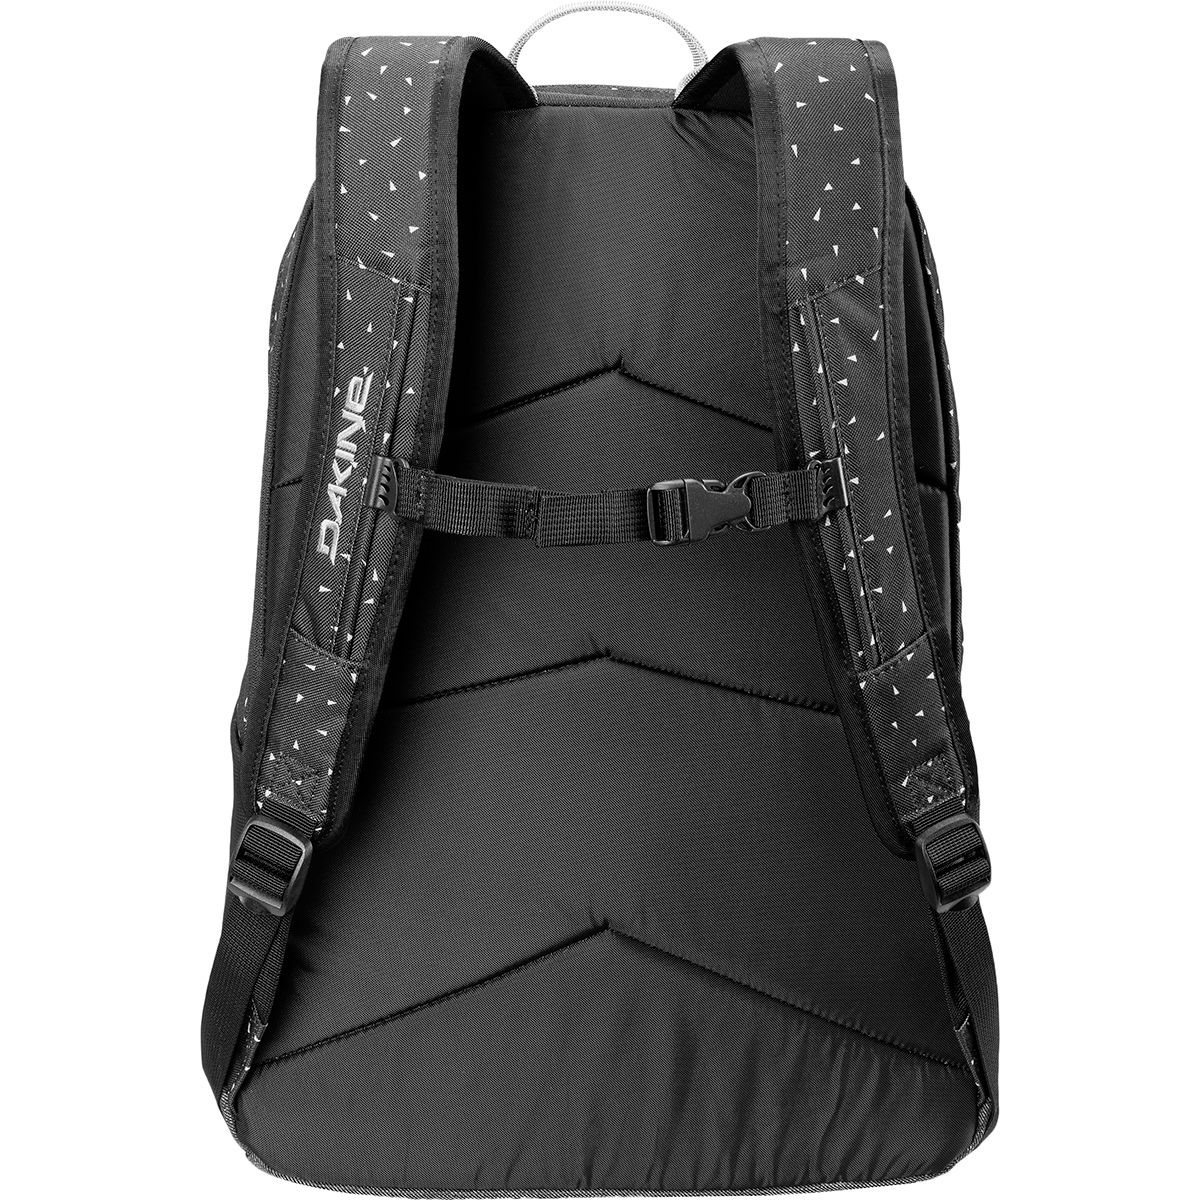 DAKINE Jewel 26L Backpack - Women's - Accessories